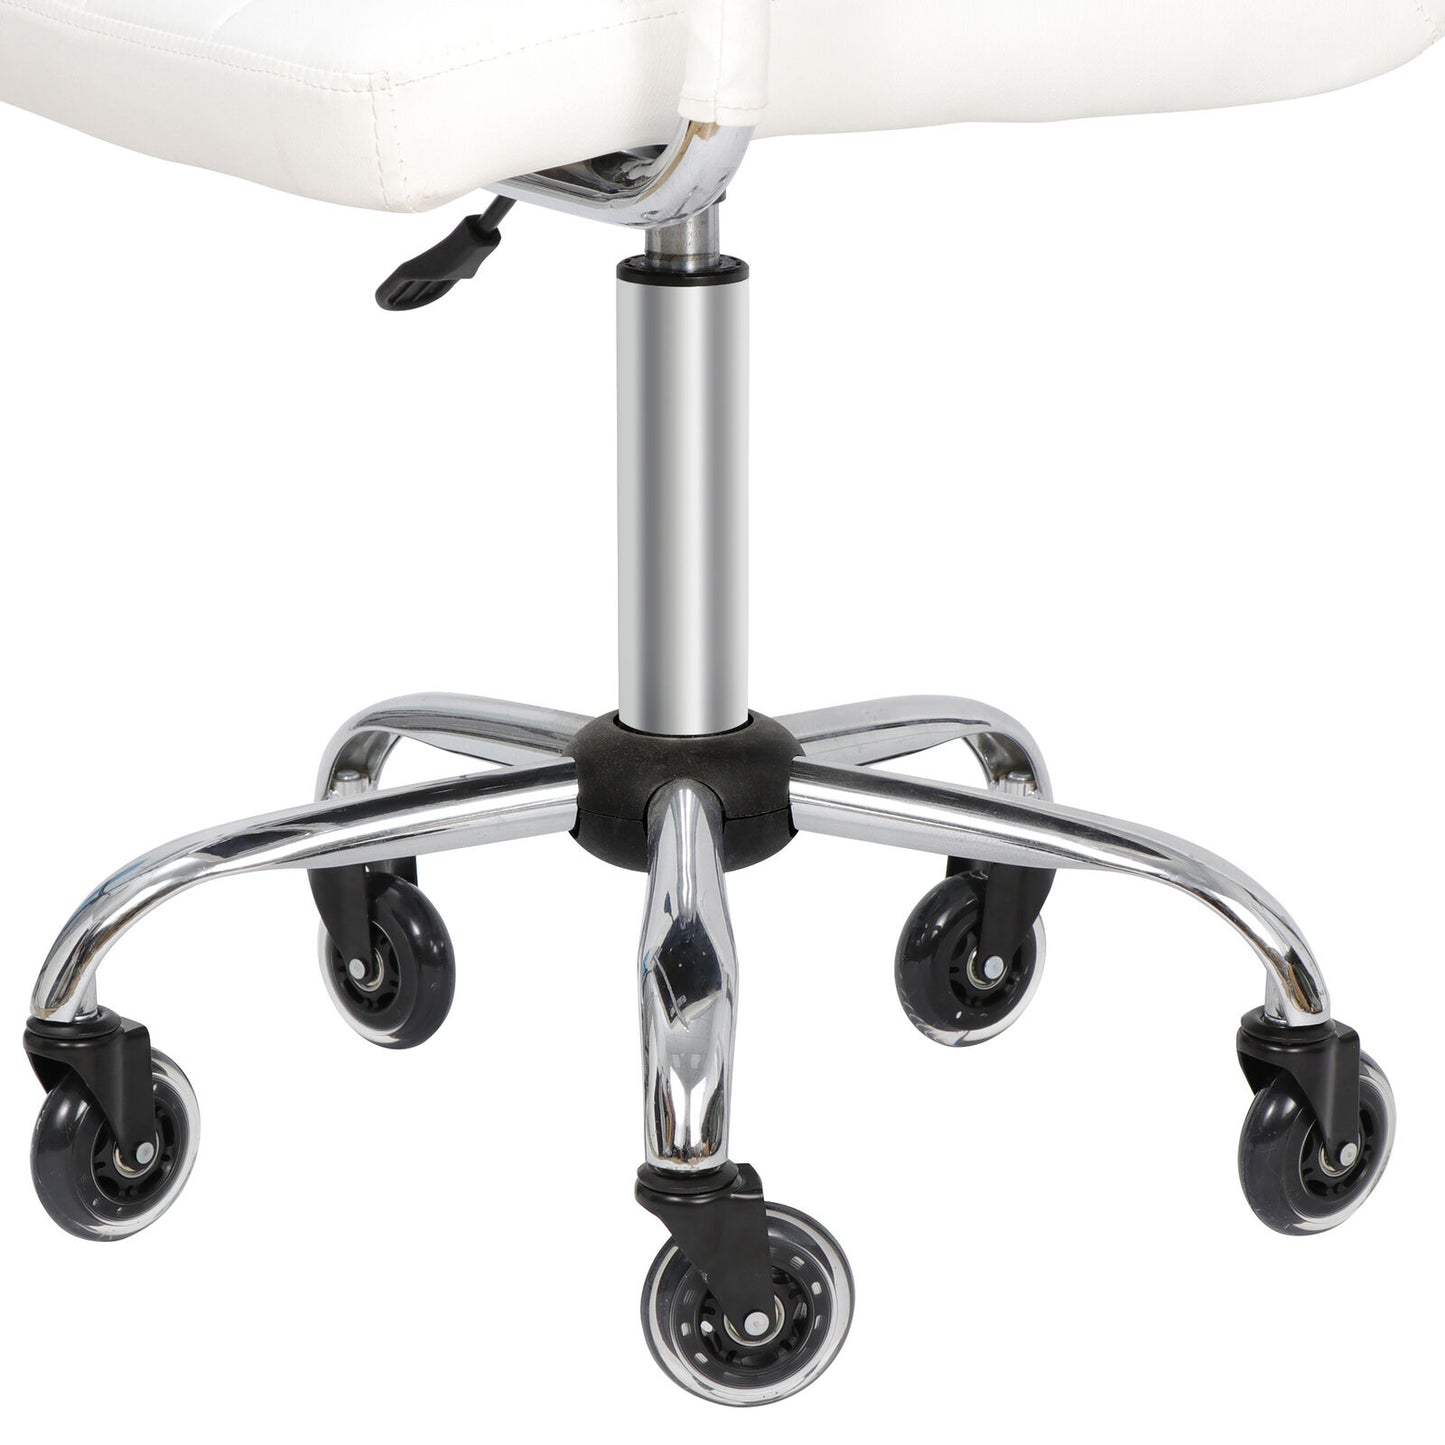 5Pcs Heavy Duty Office Chair Caster Swivel Wheels Replacement Desk Floor Mat